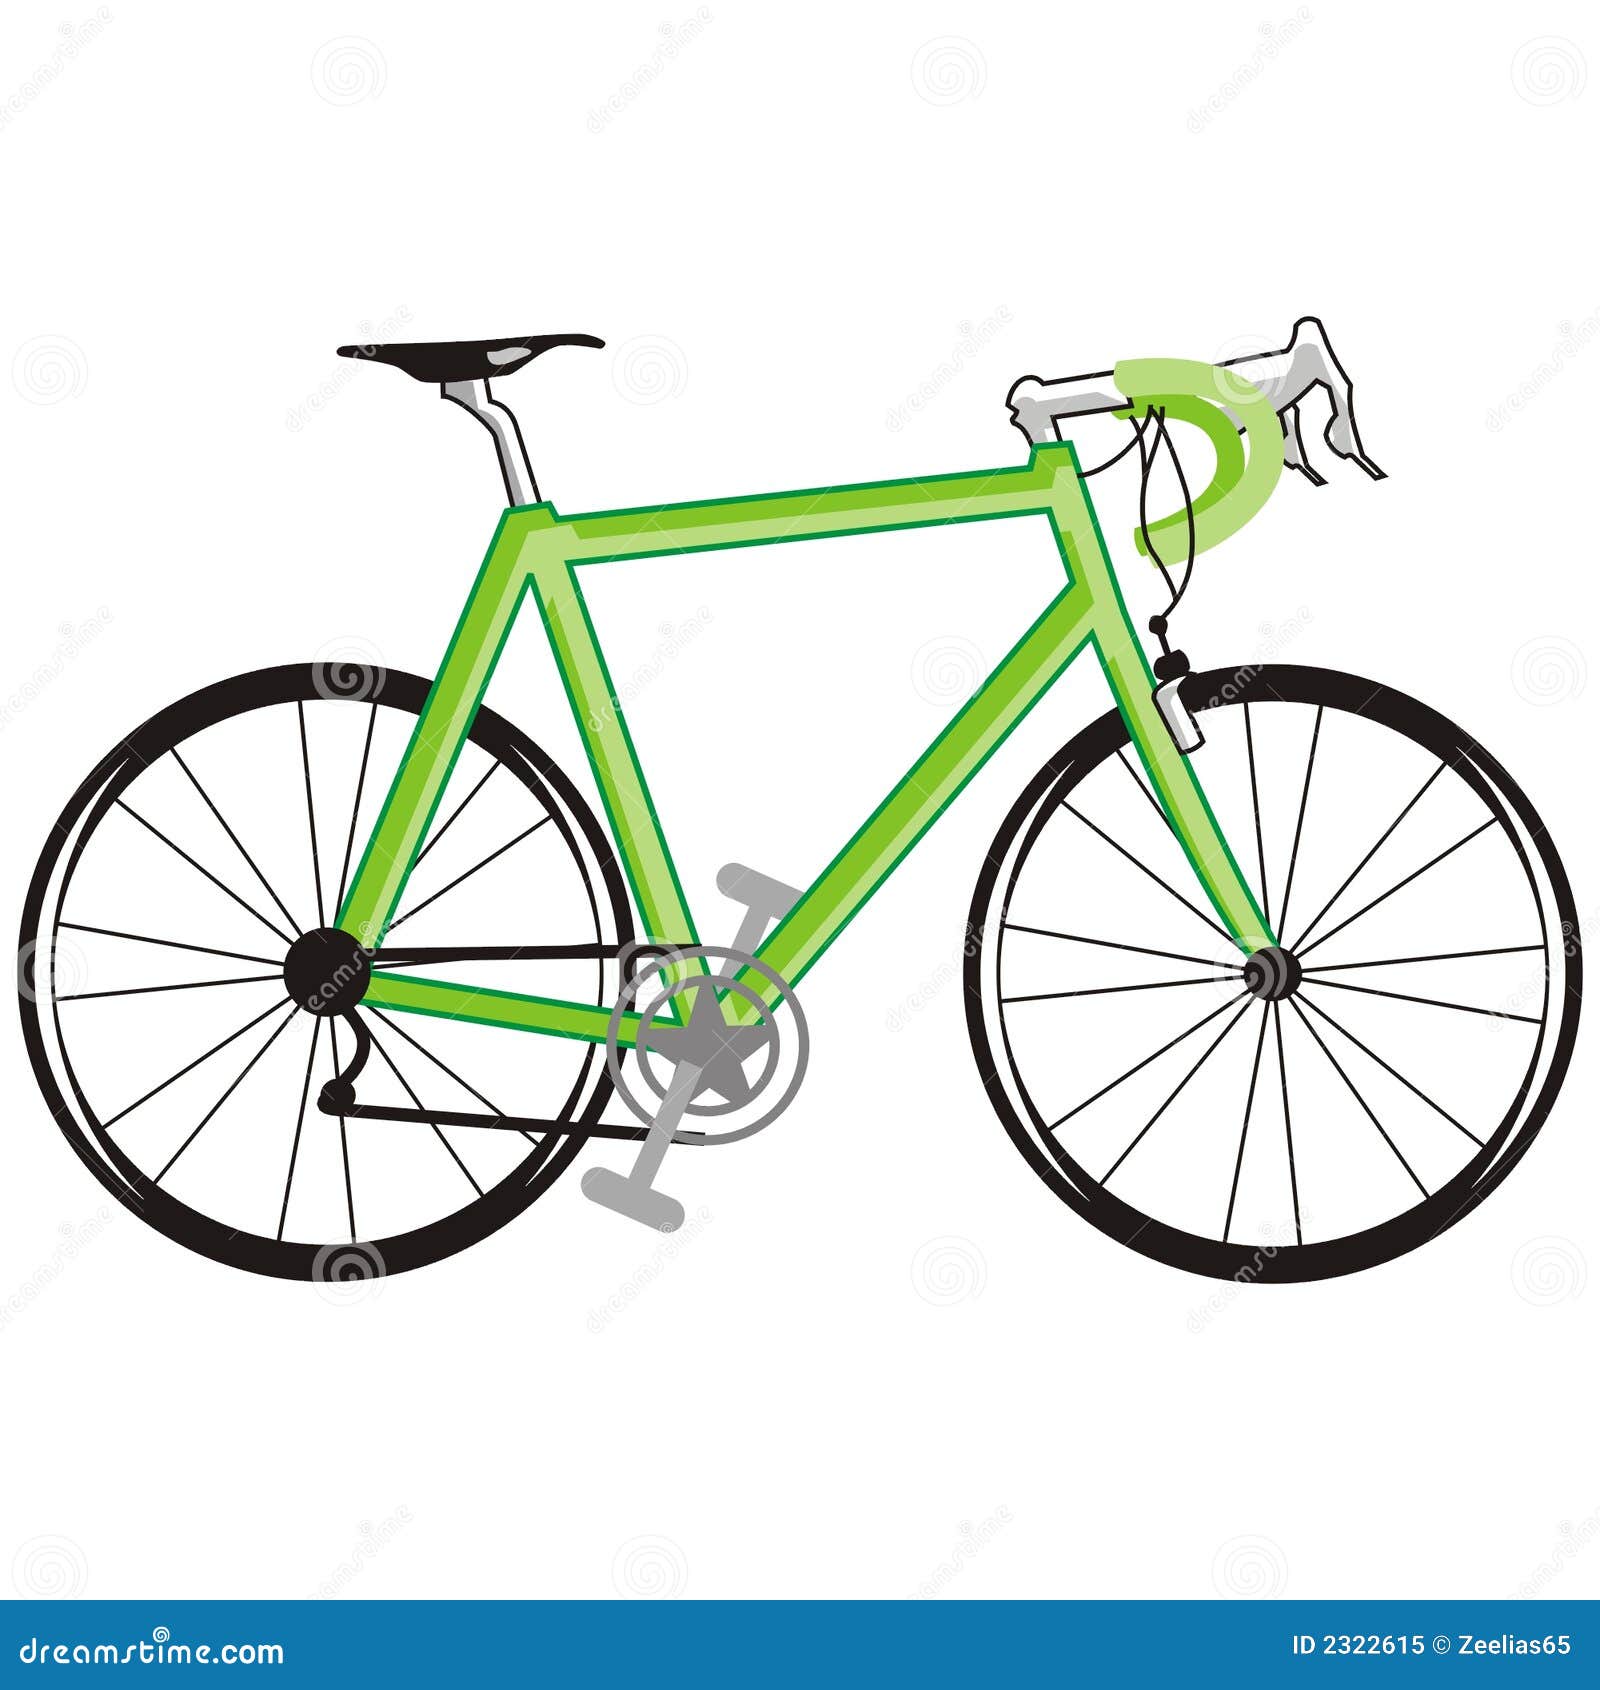 Green Bicycle Cartoon Vector | CartoonDealer.com #2322615